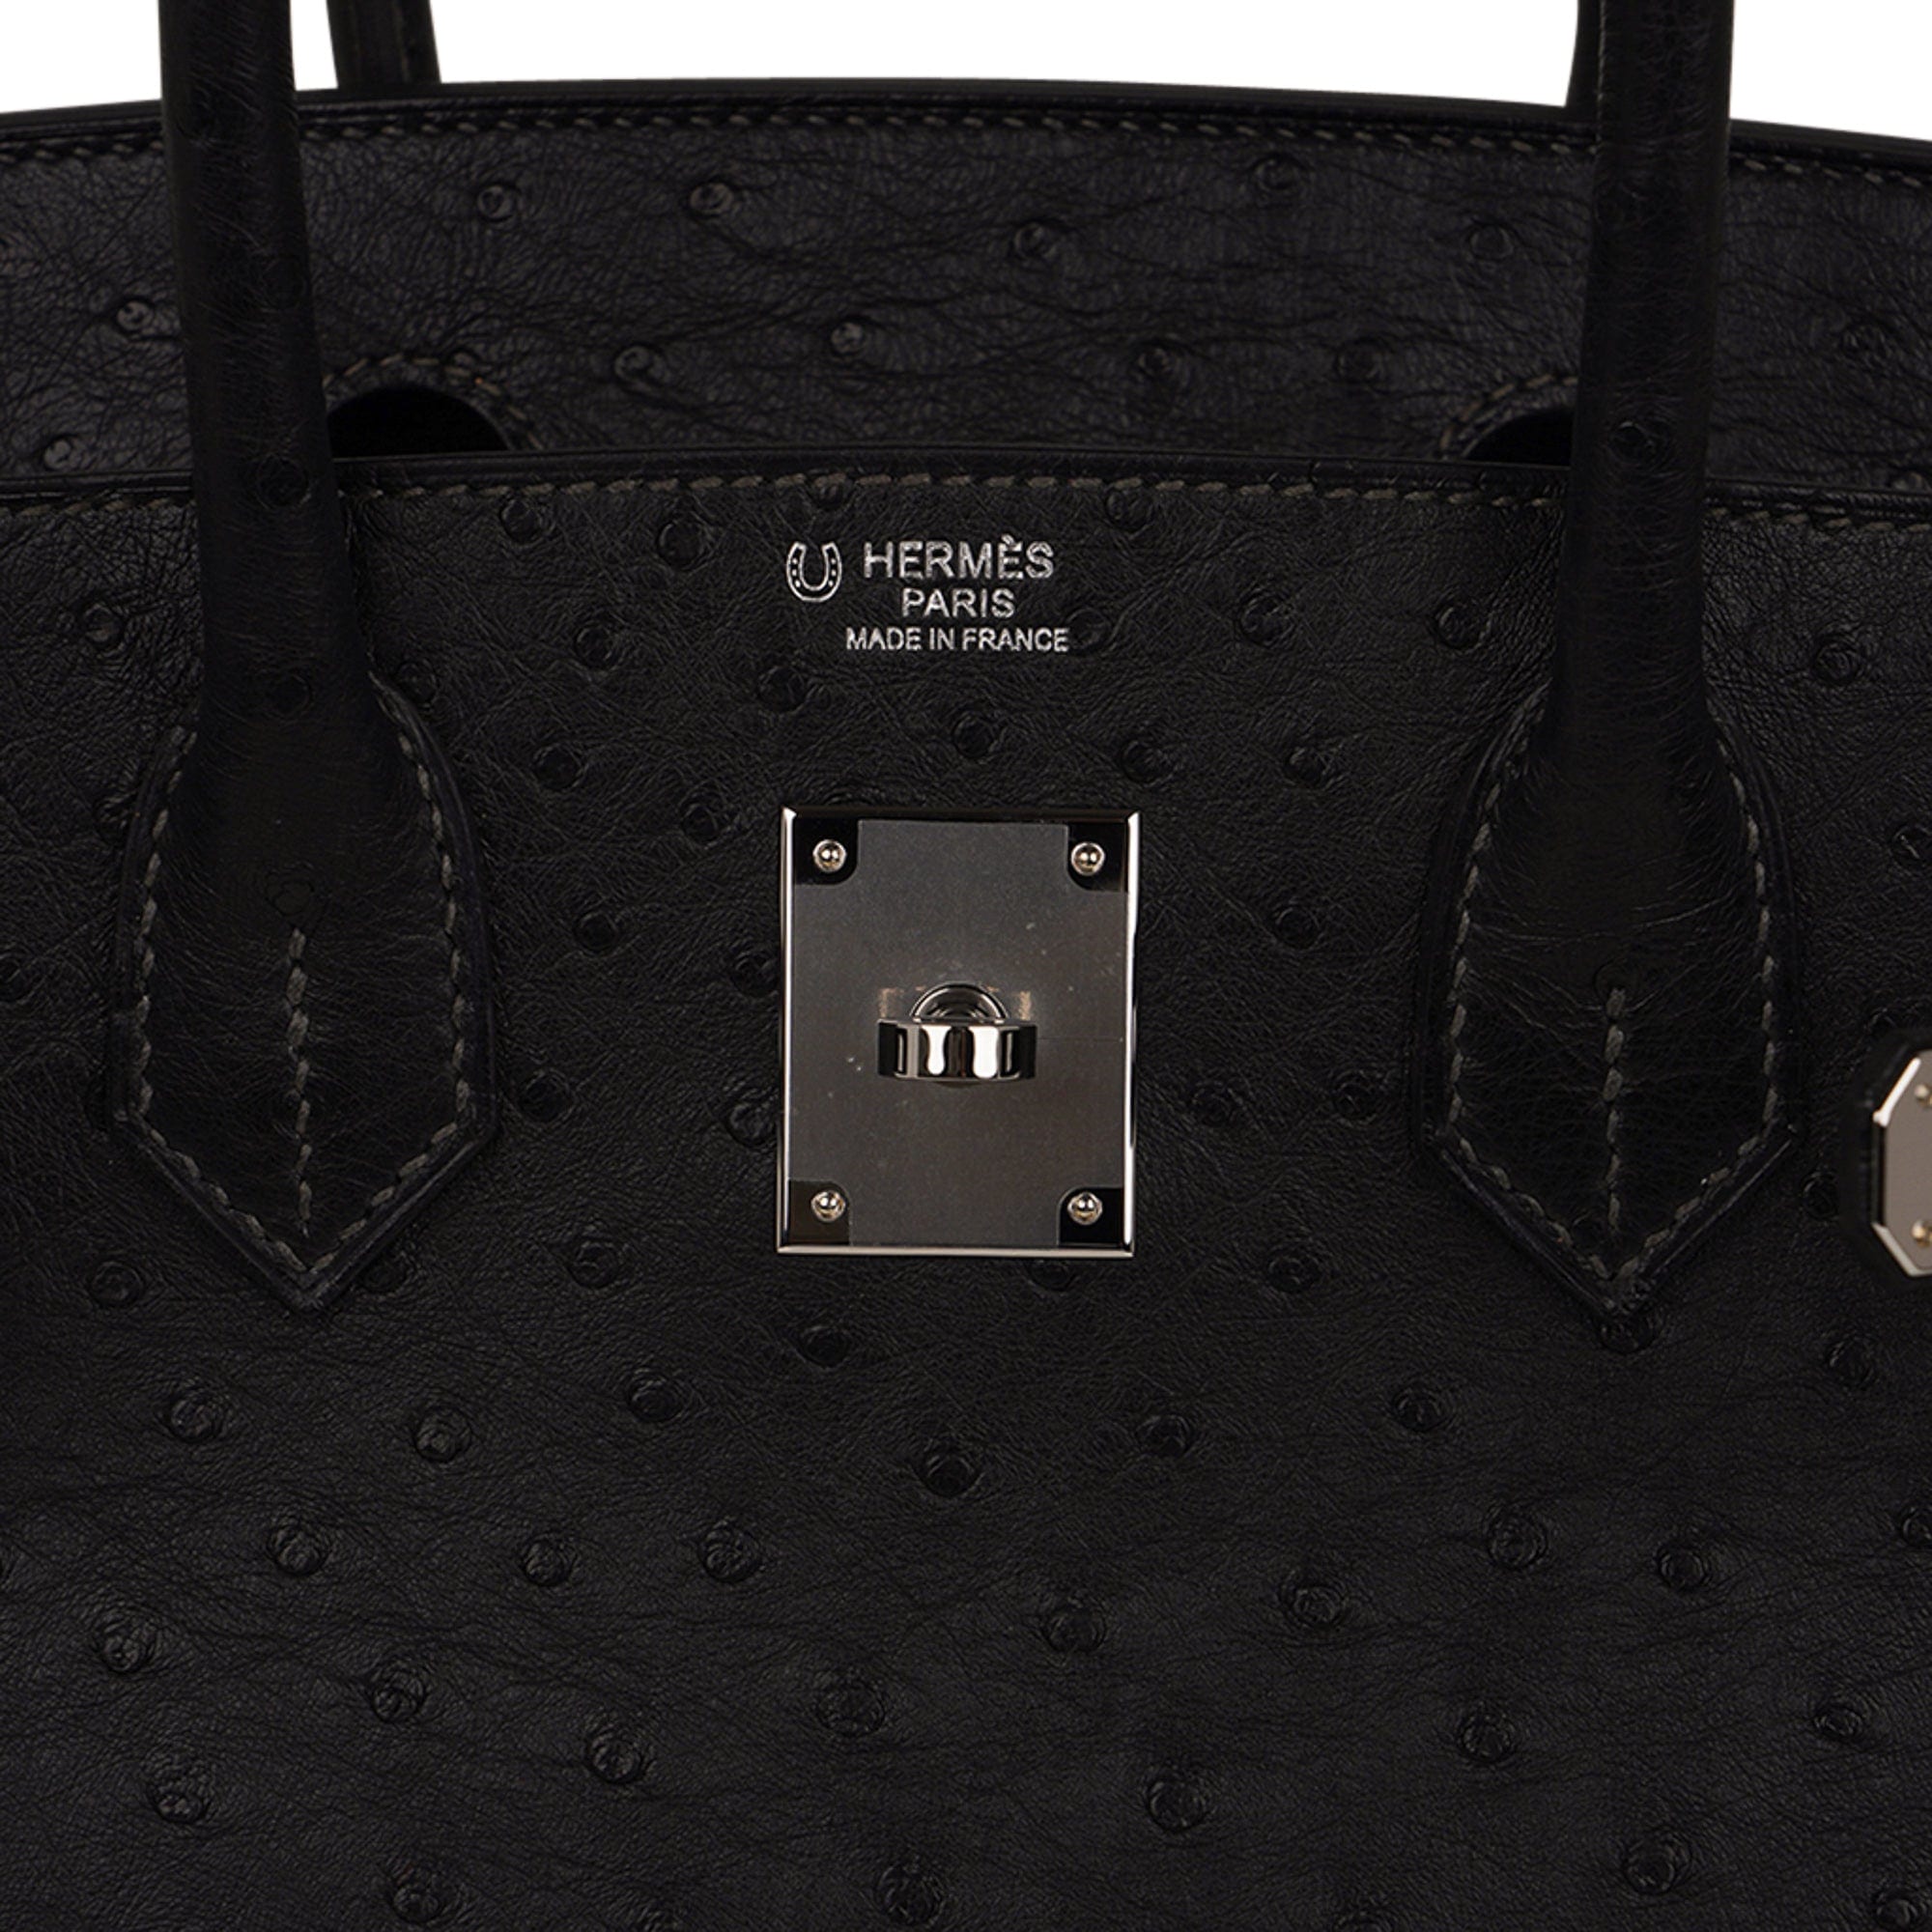 Hermès Birkin Handbag 329680